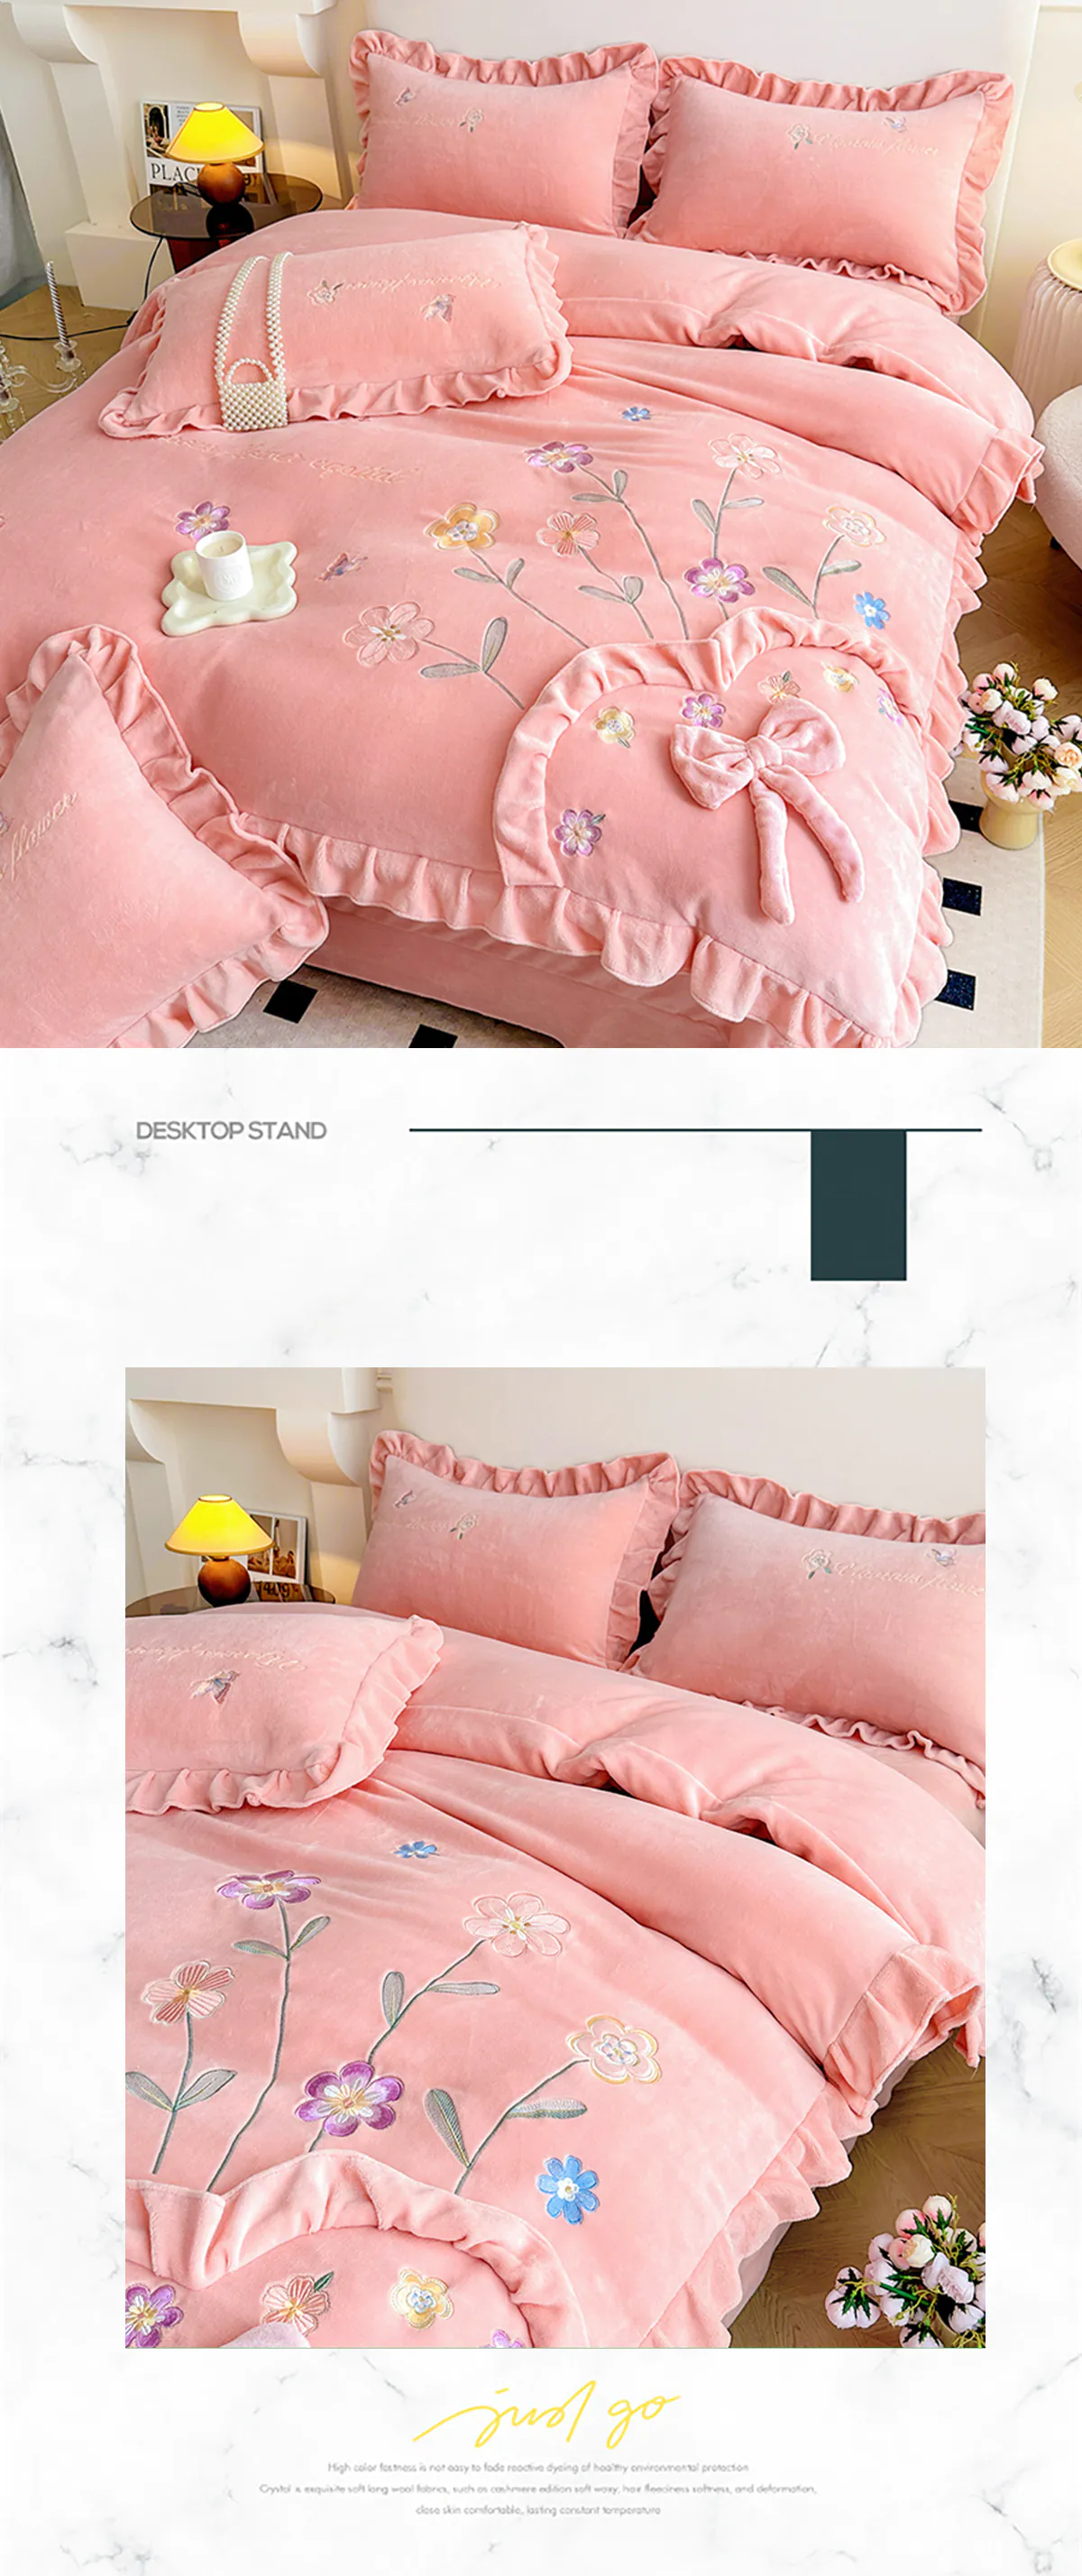 Romantic-Milk-Fiber-Comforter-Cover-Bed-Sheet-Pillowcases-4-Pcs-Set19